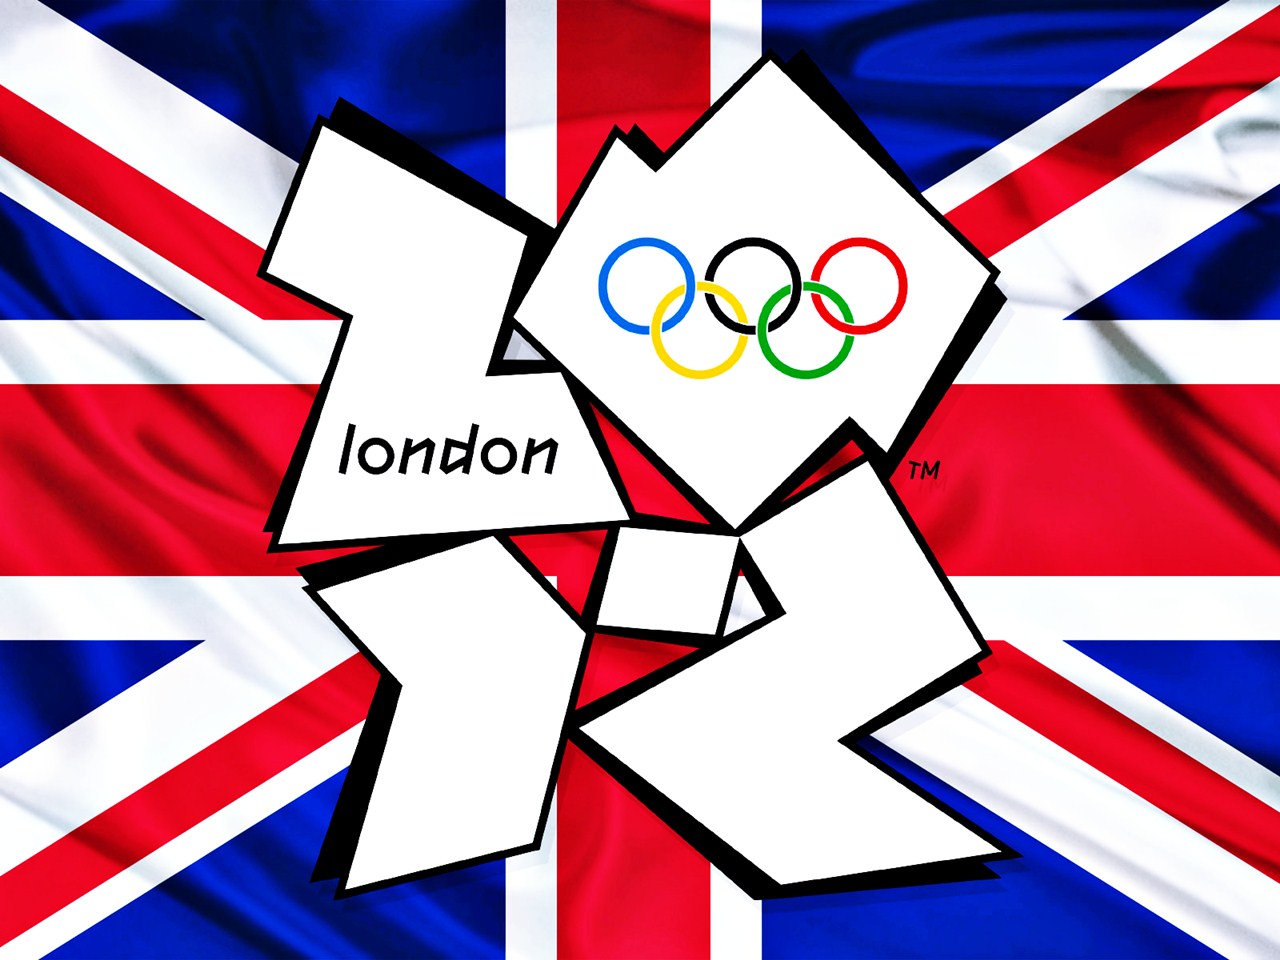 http://4.bp.blogspot.com/-PMZIFArFMK8/UCkVOszDtCI/AAAAAAAAECM/-441S0C9LC0/s1600/london-2012-olympic-games.jpg